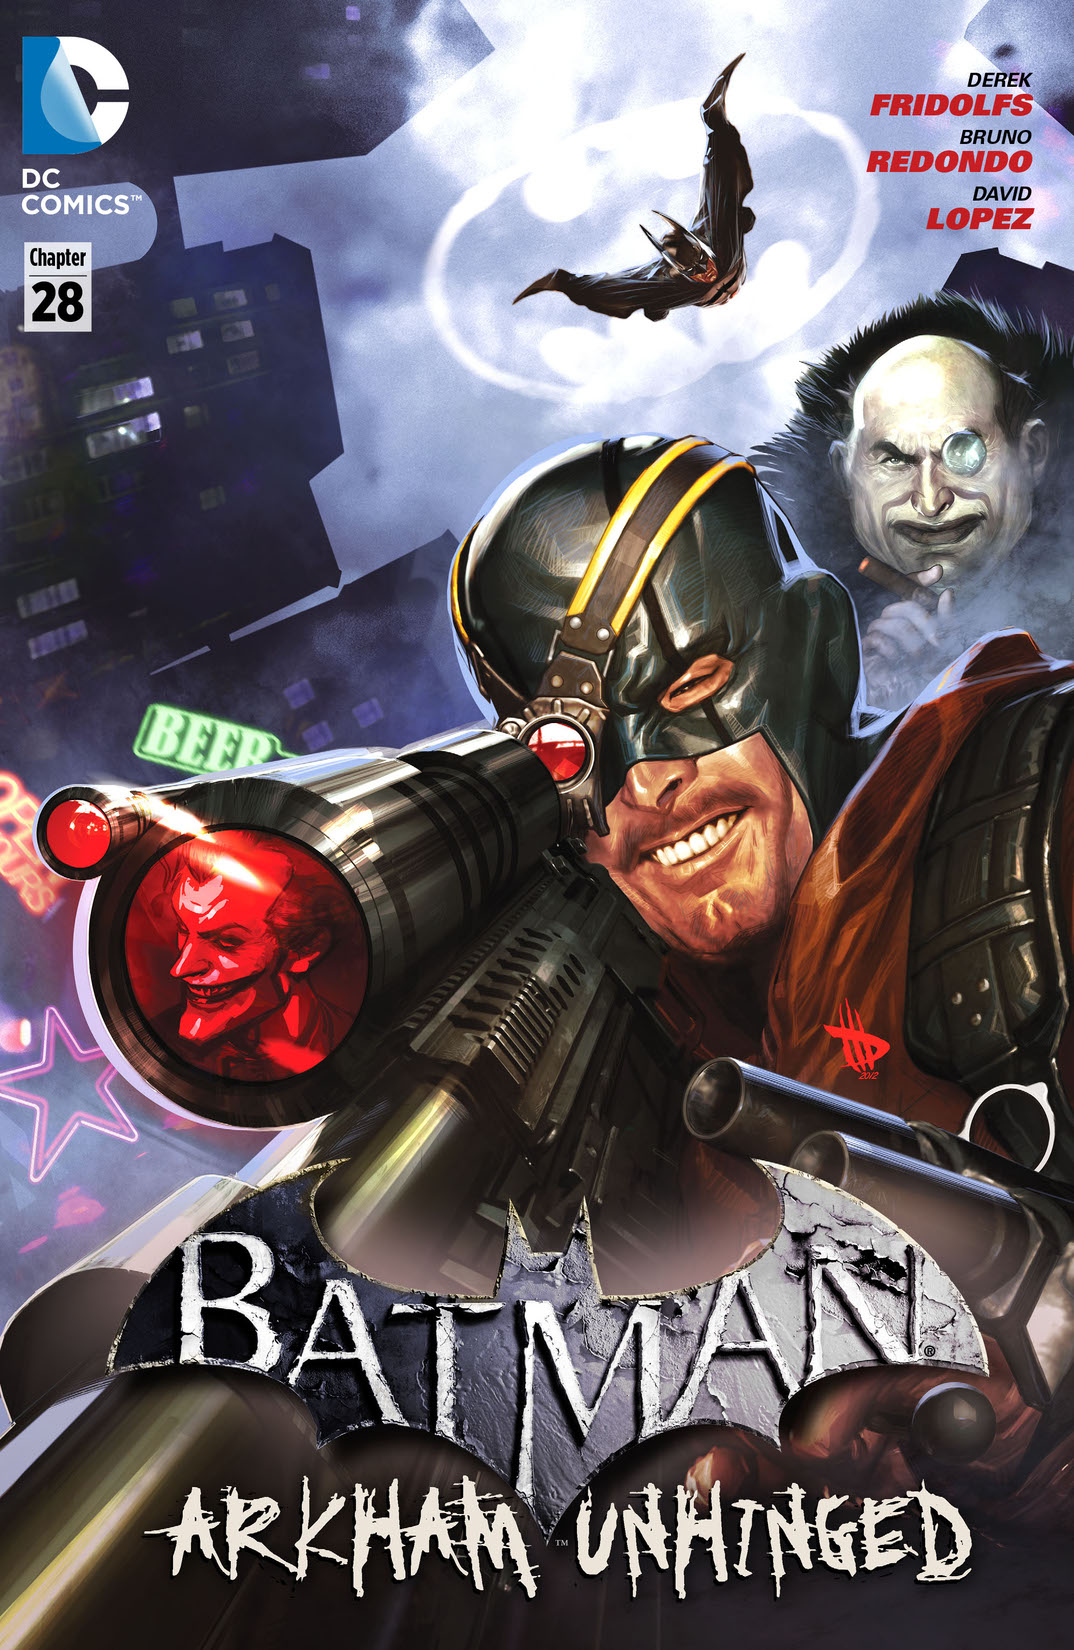 Batman: Arkham Unhinged #28 preview images